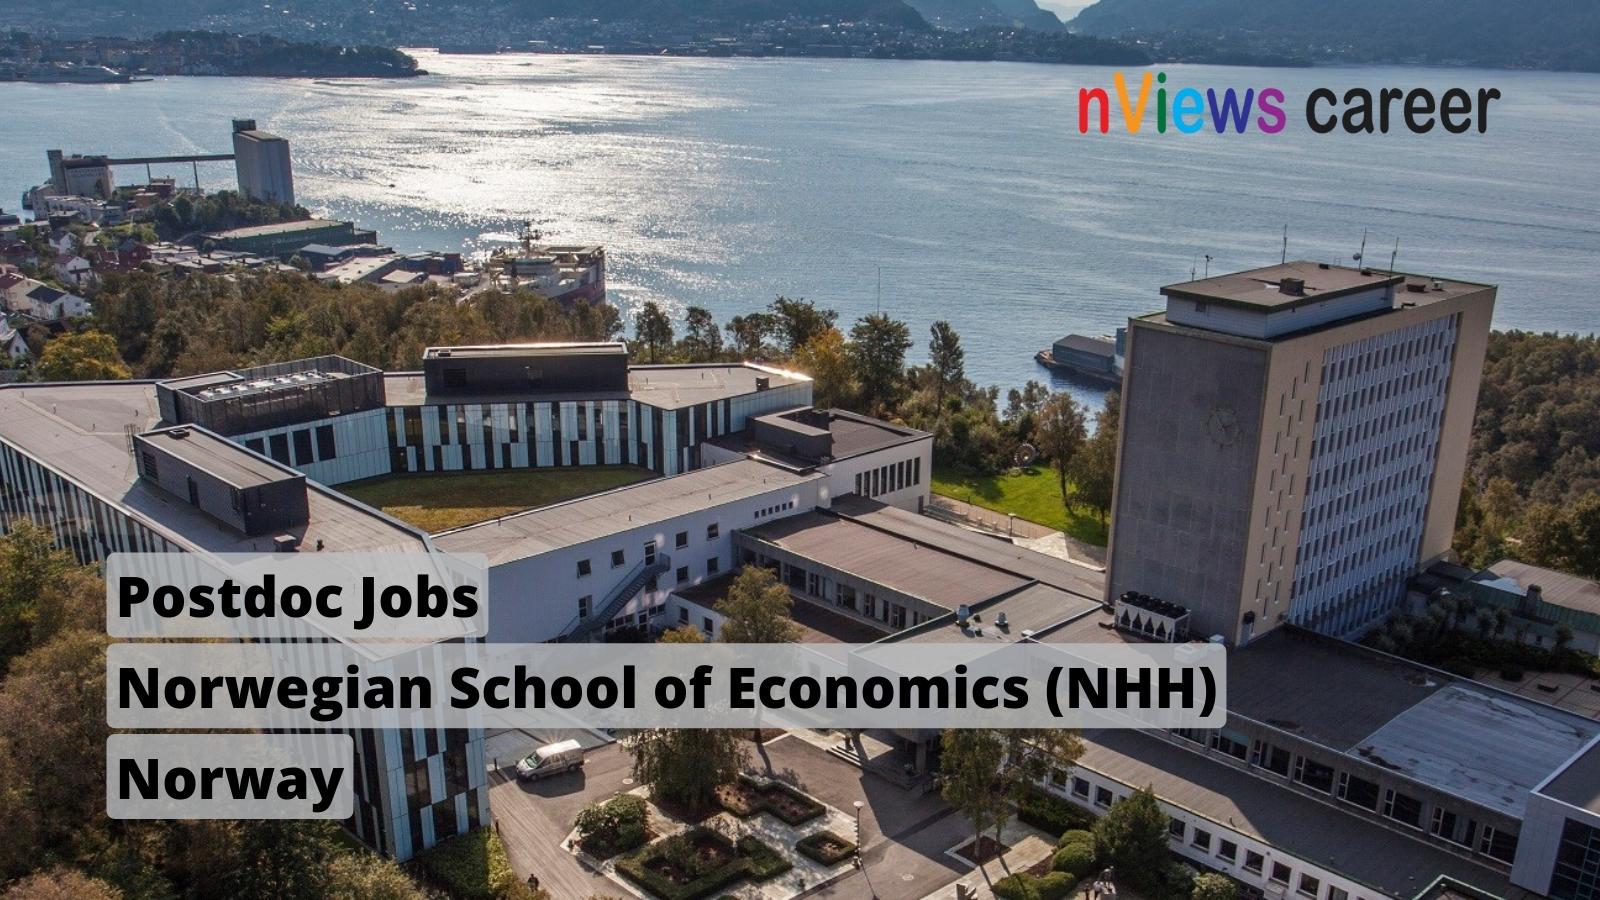 Postdoc Jobs at NHH Norwegian School Economics - Campus View